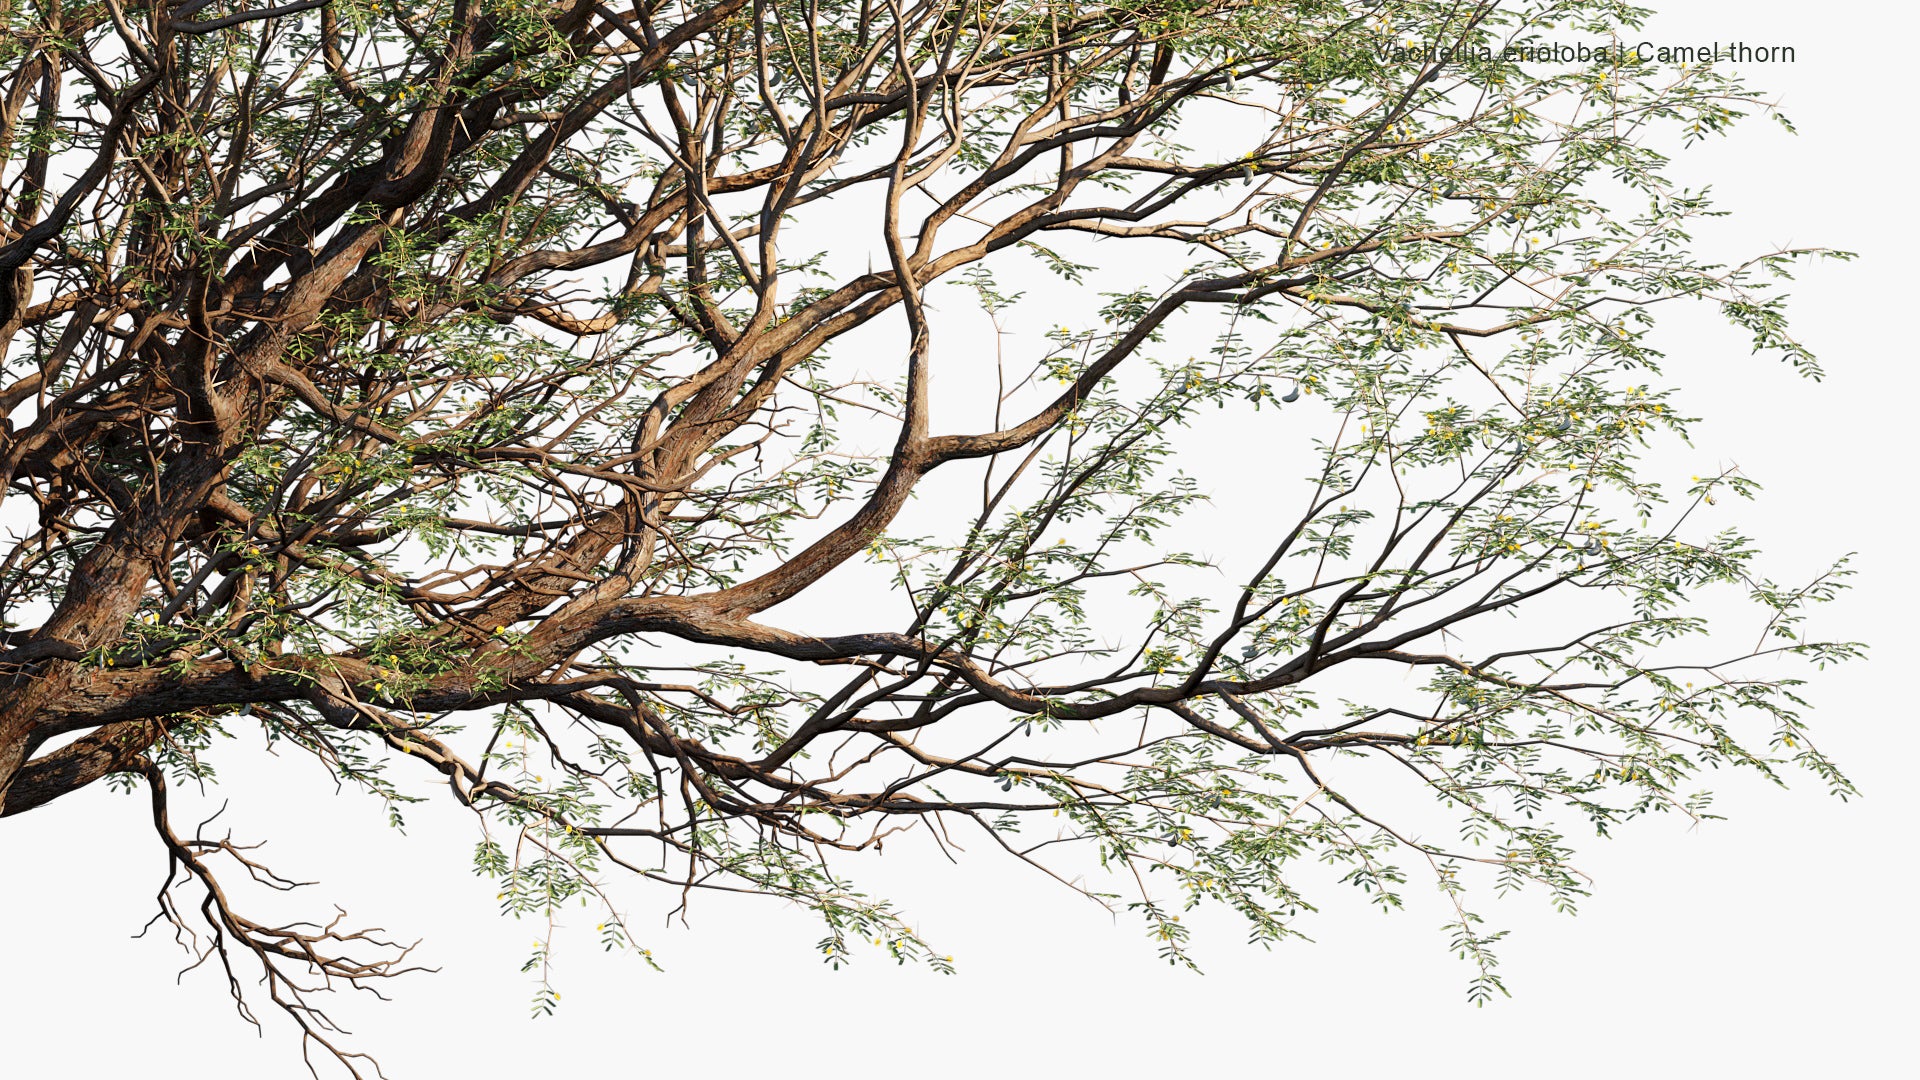 Vachellia Erioloba - Camel Thorn,  Giraffe Thorn, Mokala Tree, Kameeldoring (3D Model)